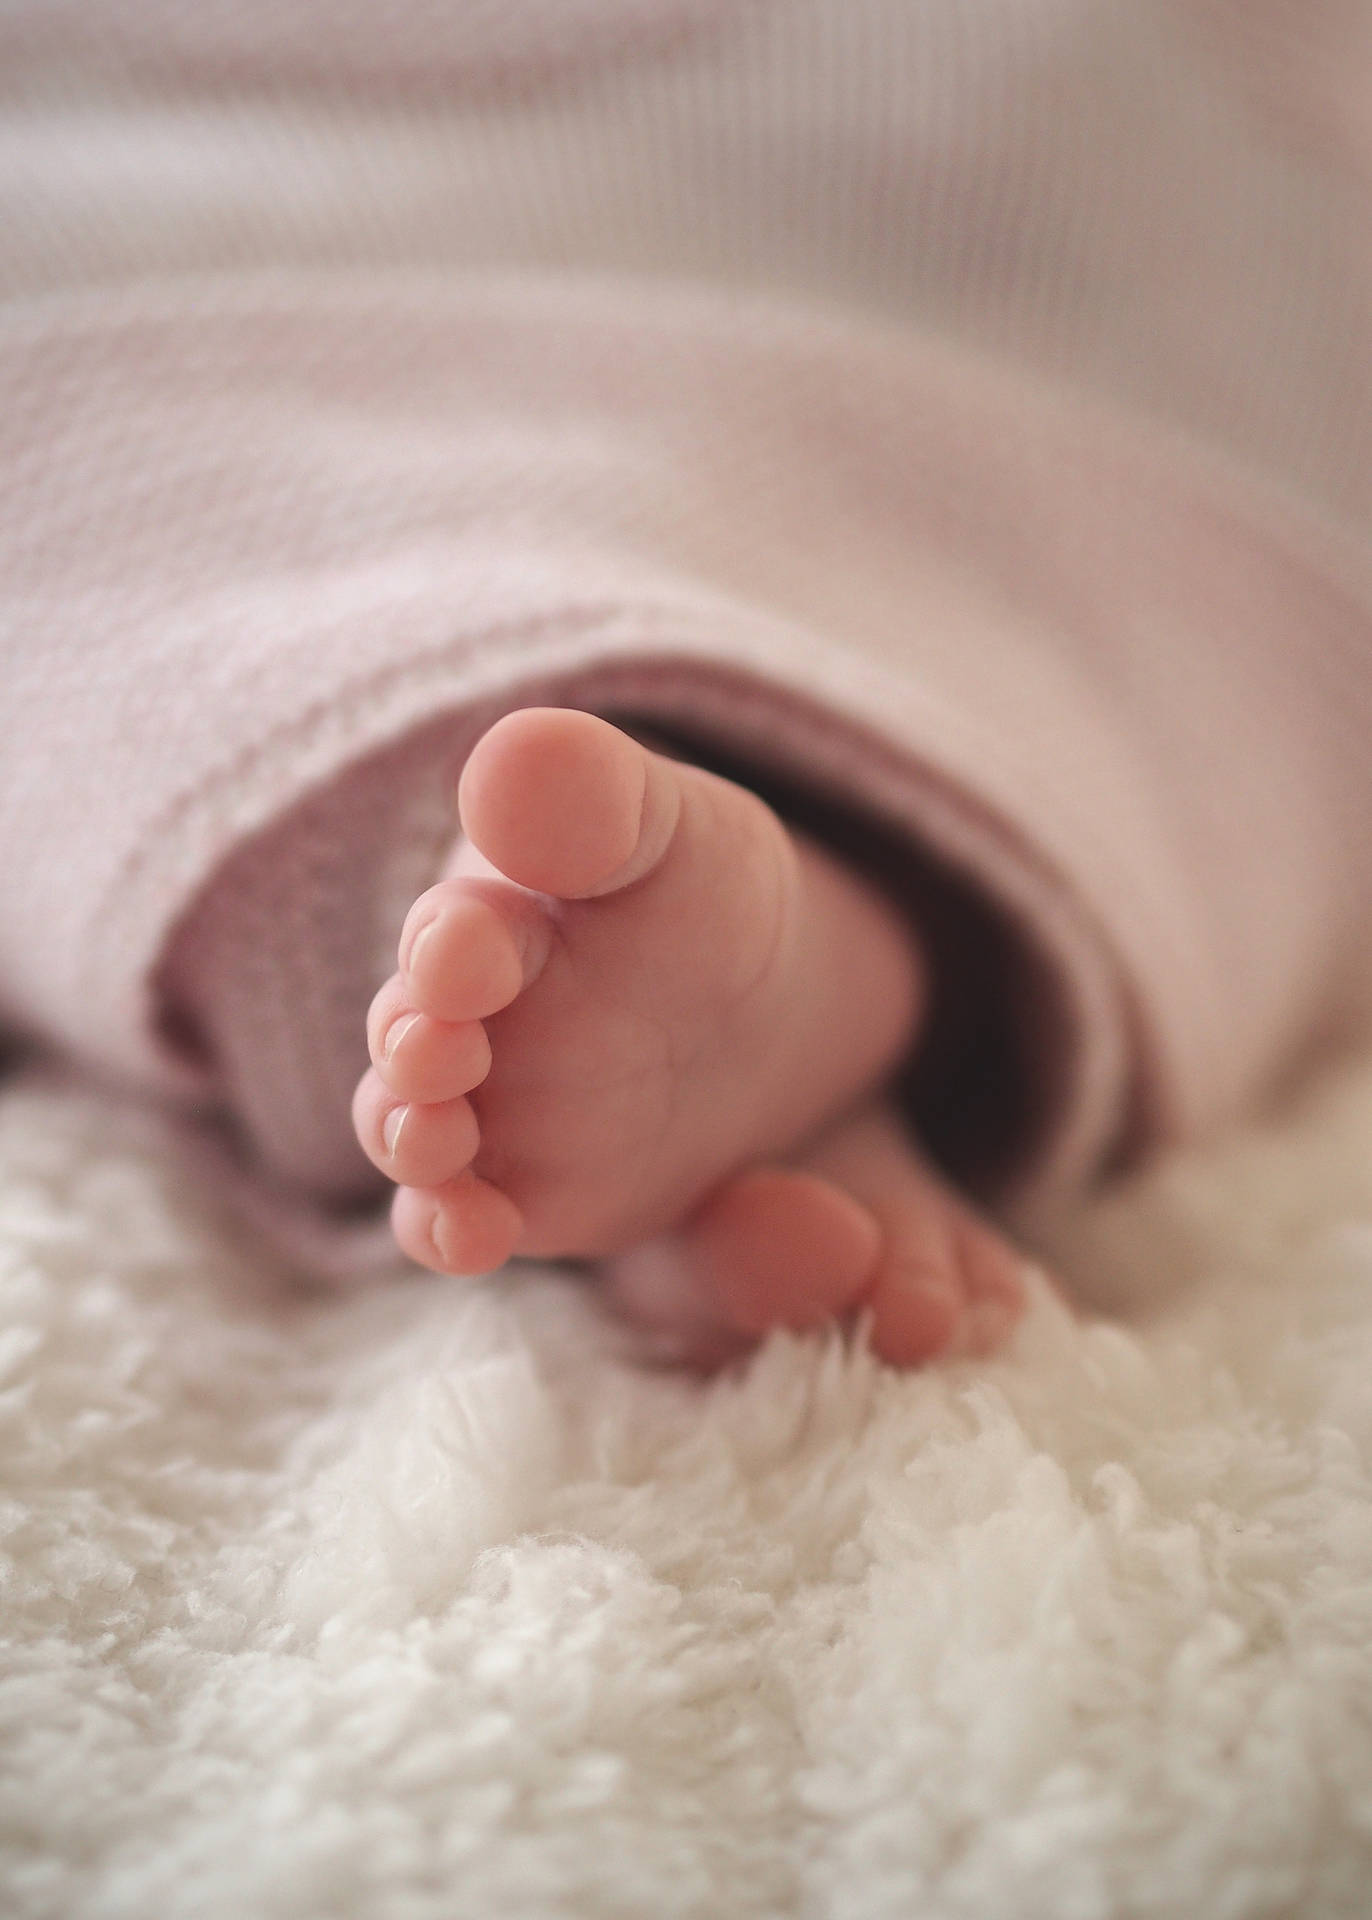 Feet Of A Child On Fur Wallpaper